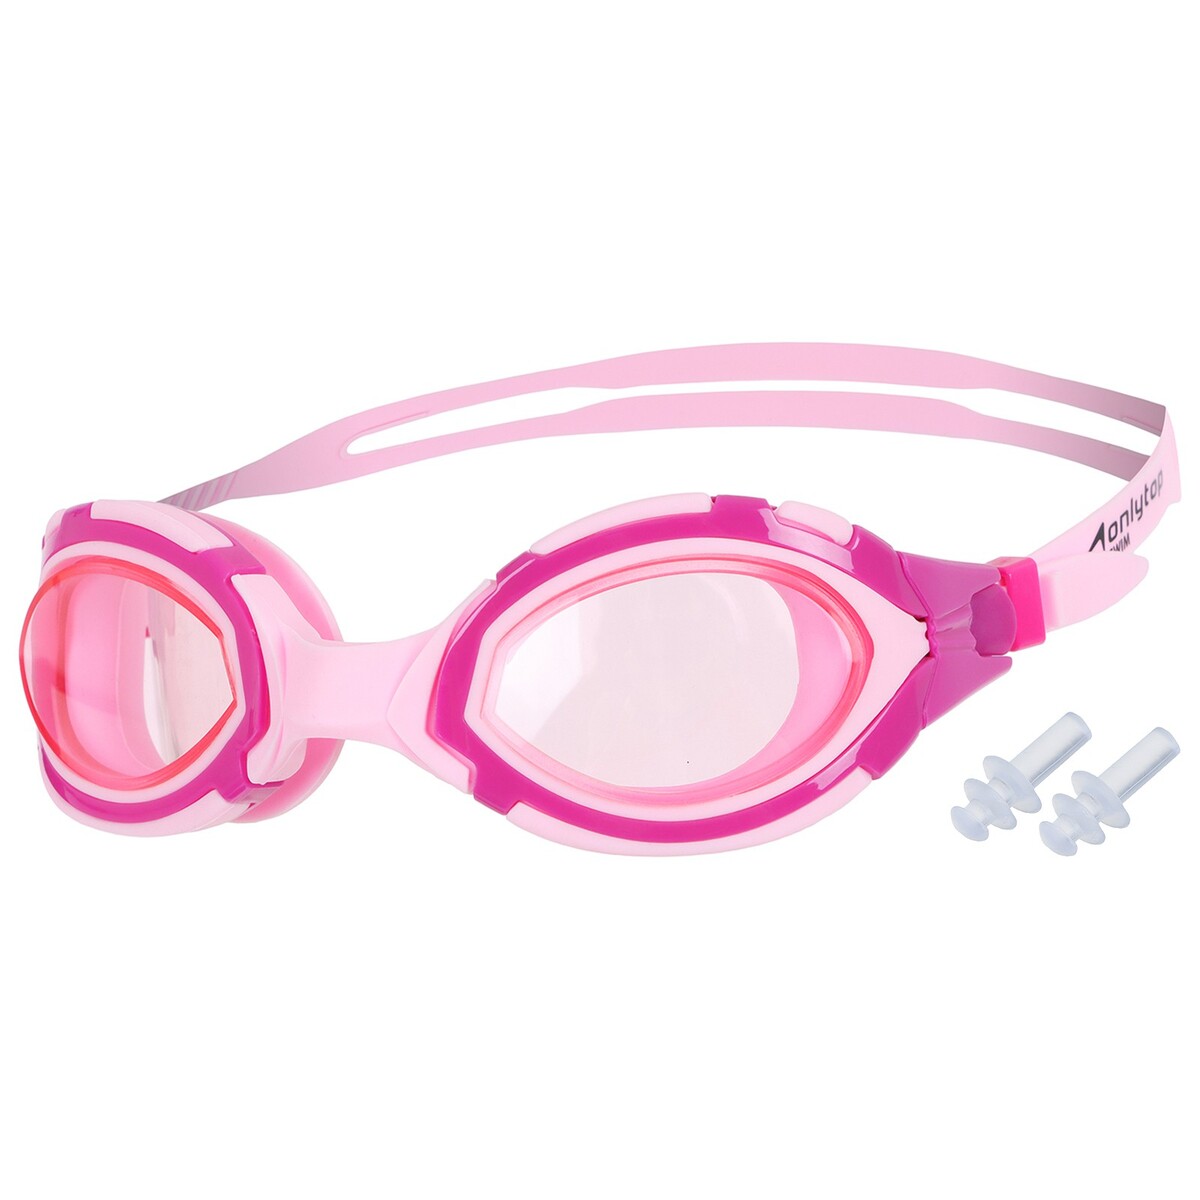 Очки для плавания onlytop, беруши, uv защита, цвет розовый очки для плавания pro master силикон незапотевающие uv защита 3 а от 14 лет 55692